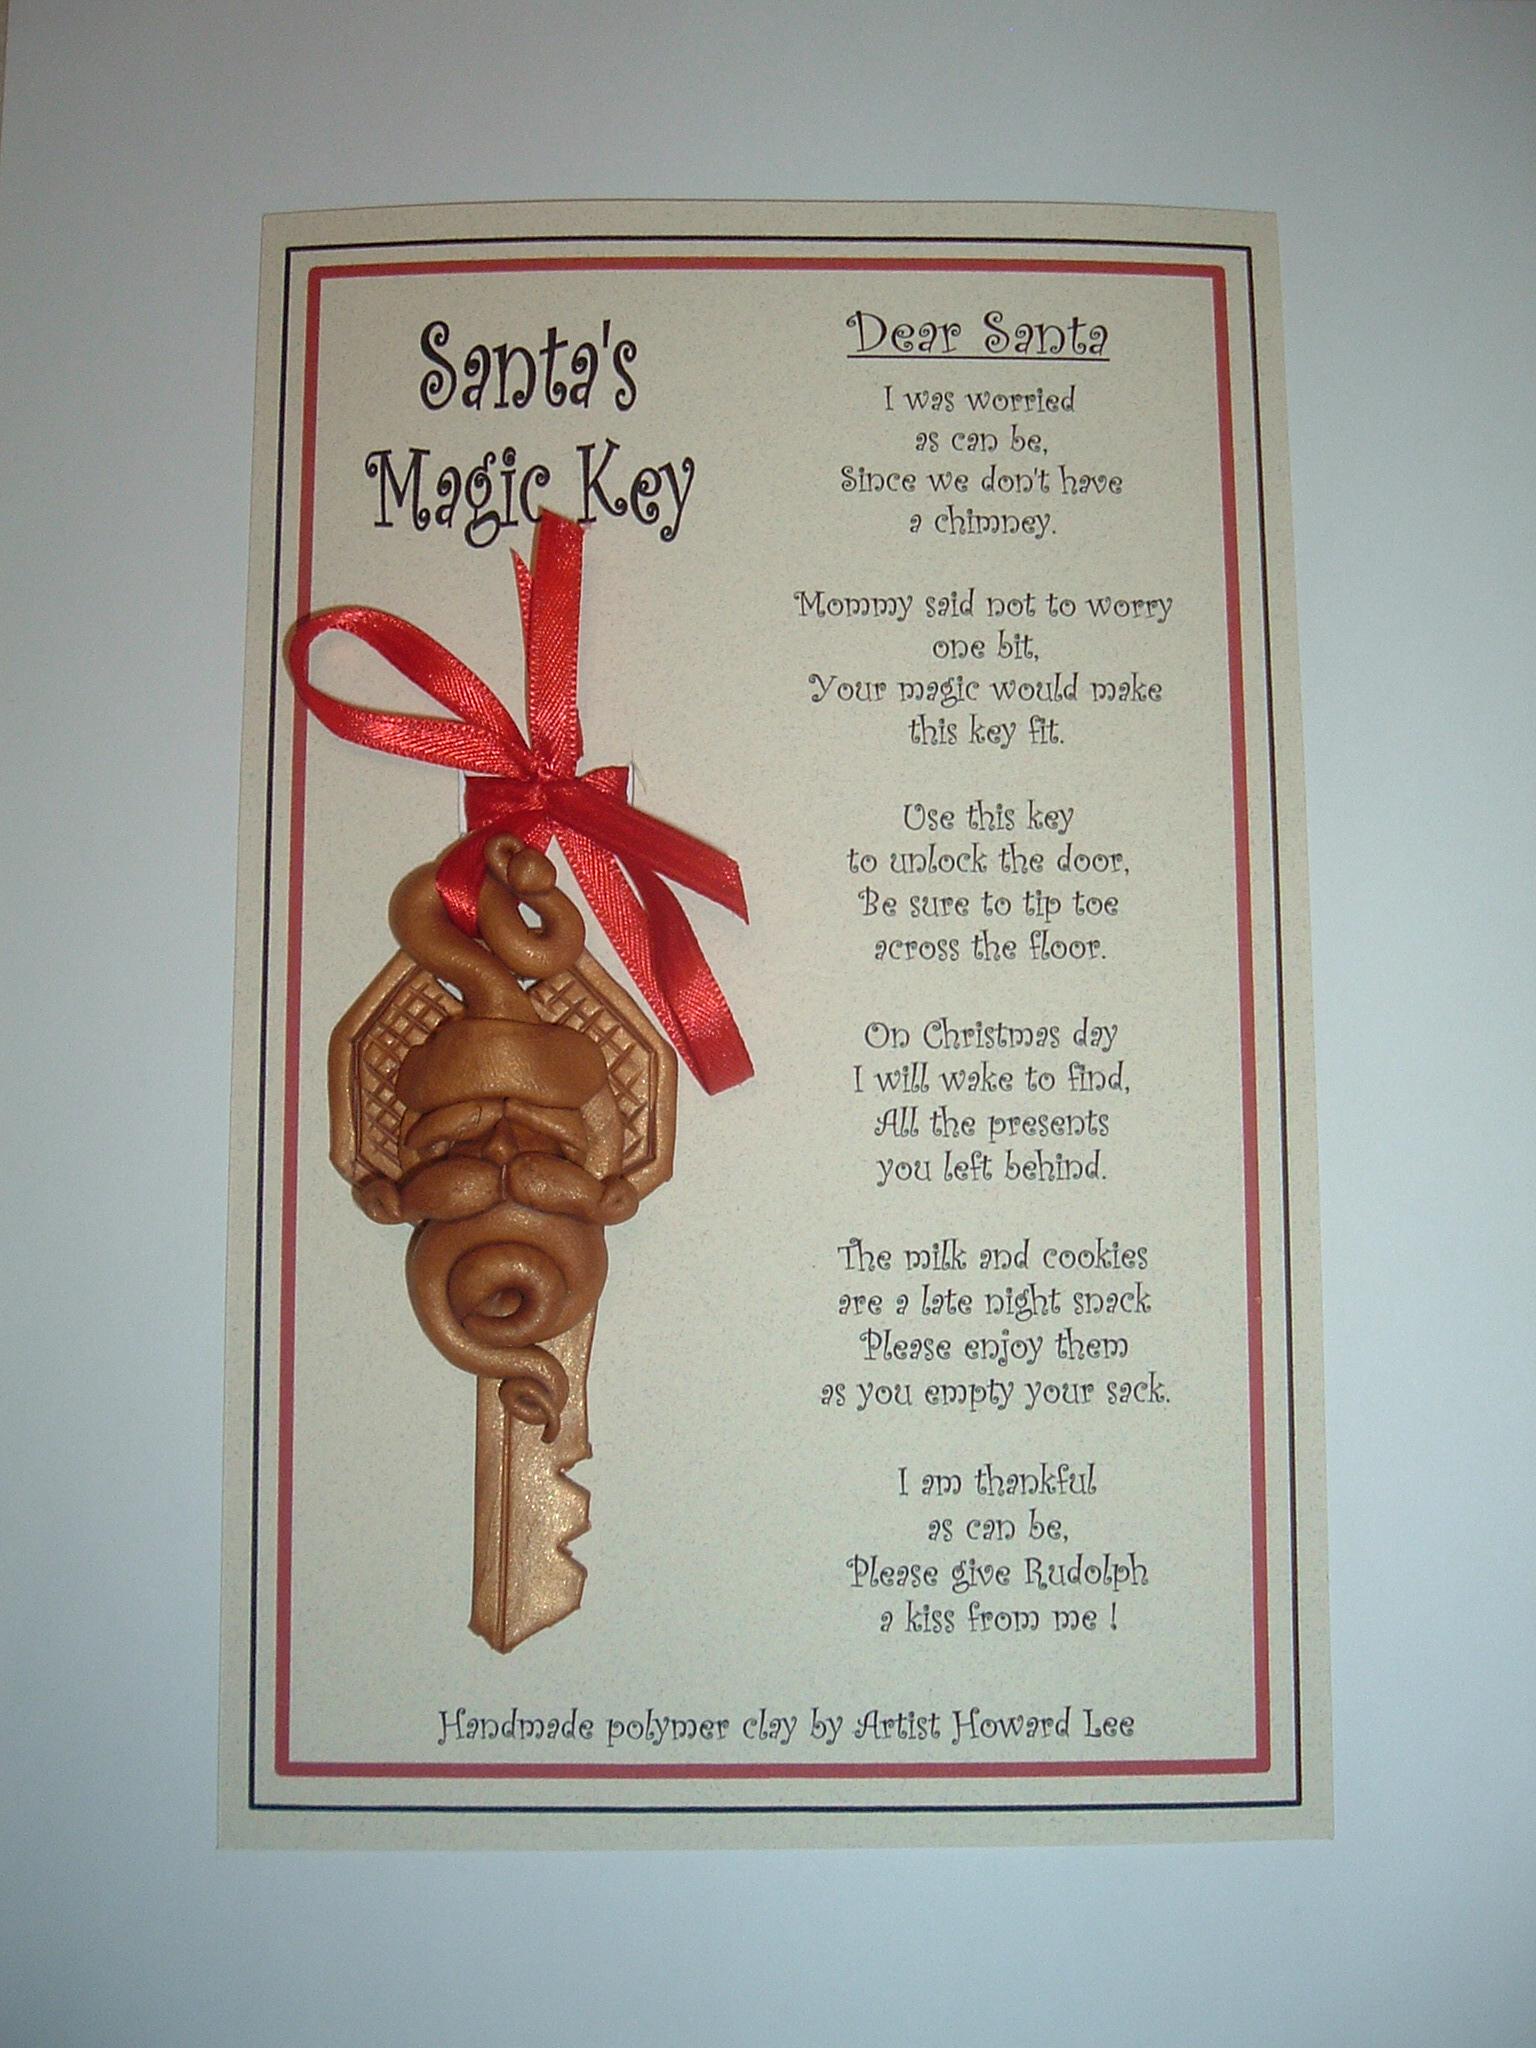 Fruitful Jewelry Christmas Santa/’s Magic Key .The Magic Key of Christmas meas That we Will Start a New Year